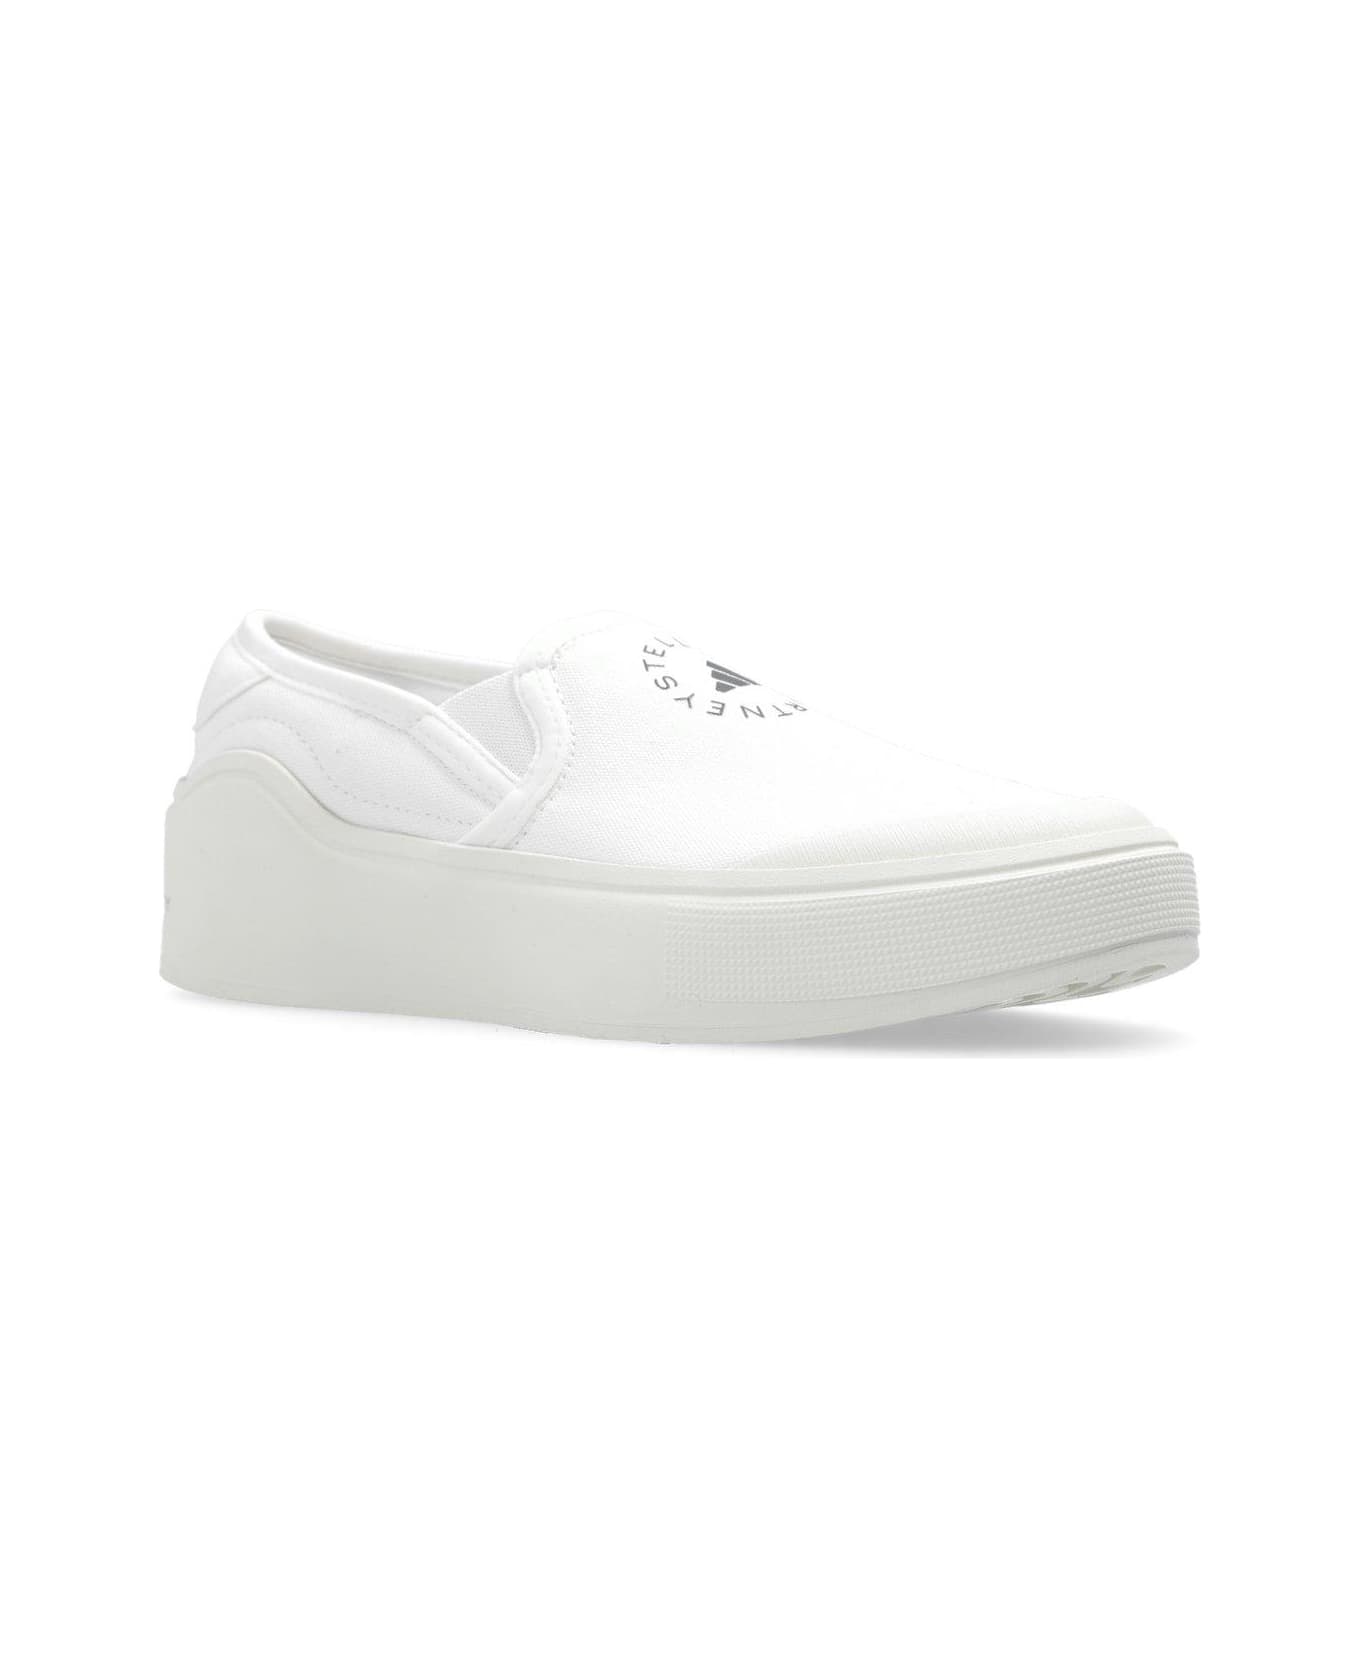 Adidas by Stella McCartney Court Slip-on Sneakers - Ftwwht Ftwwht Cblack スニーカー